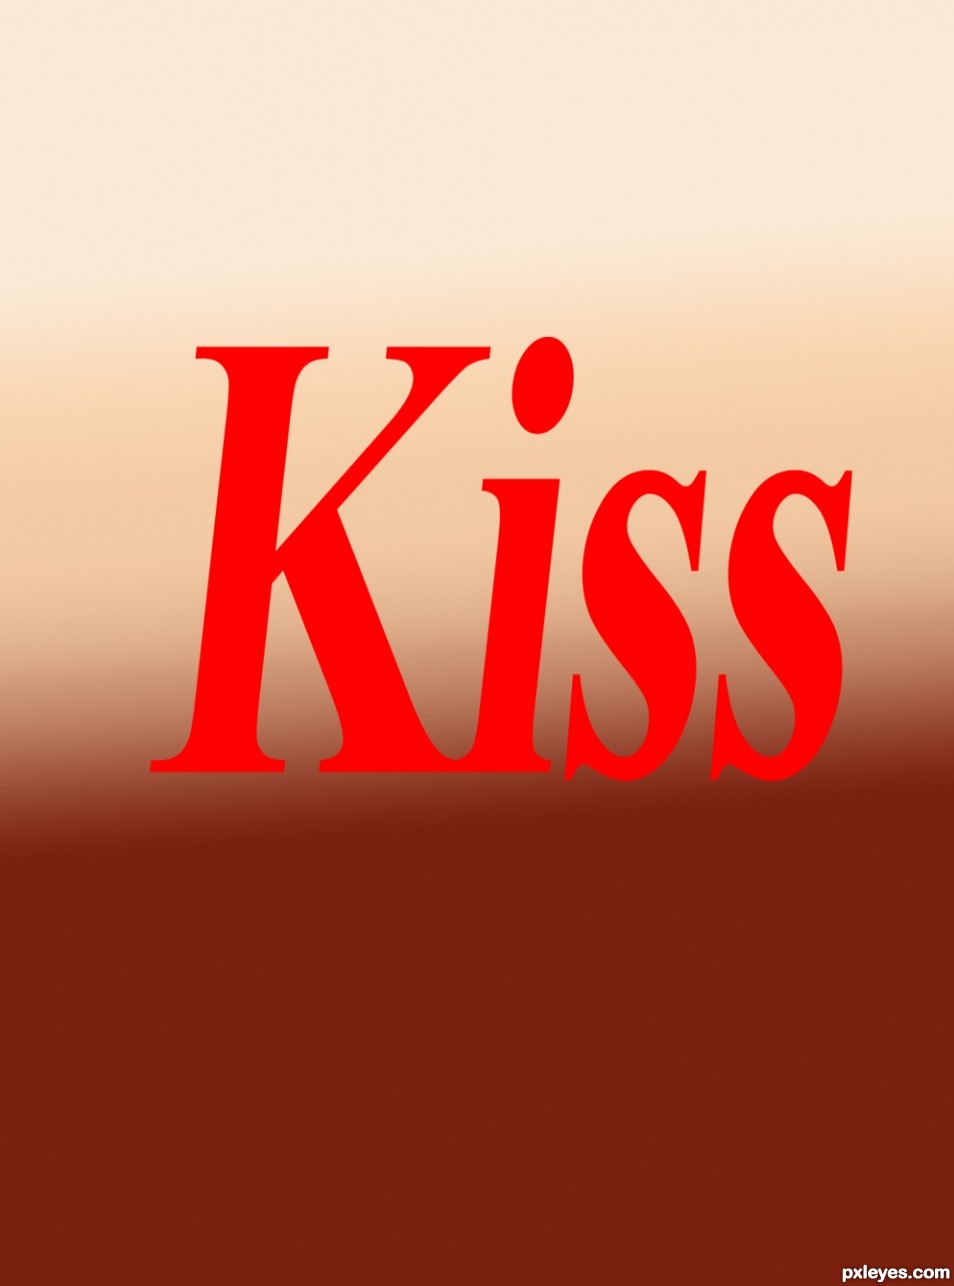 Creation of Kiss Kiss xoxo: Step 2